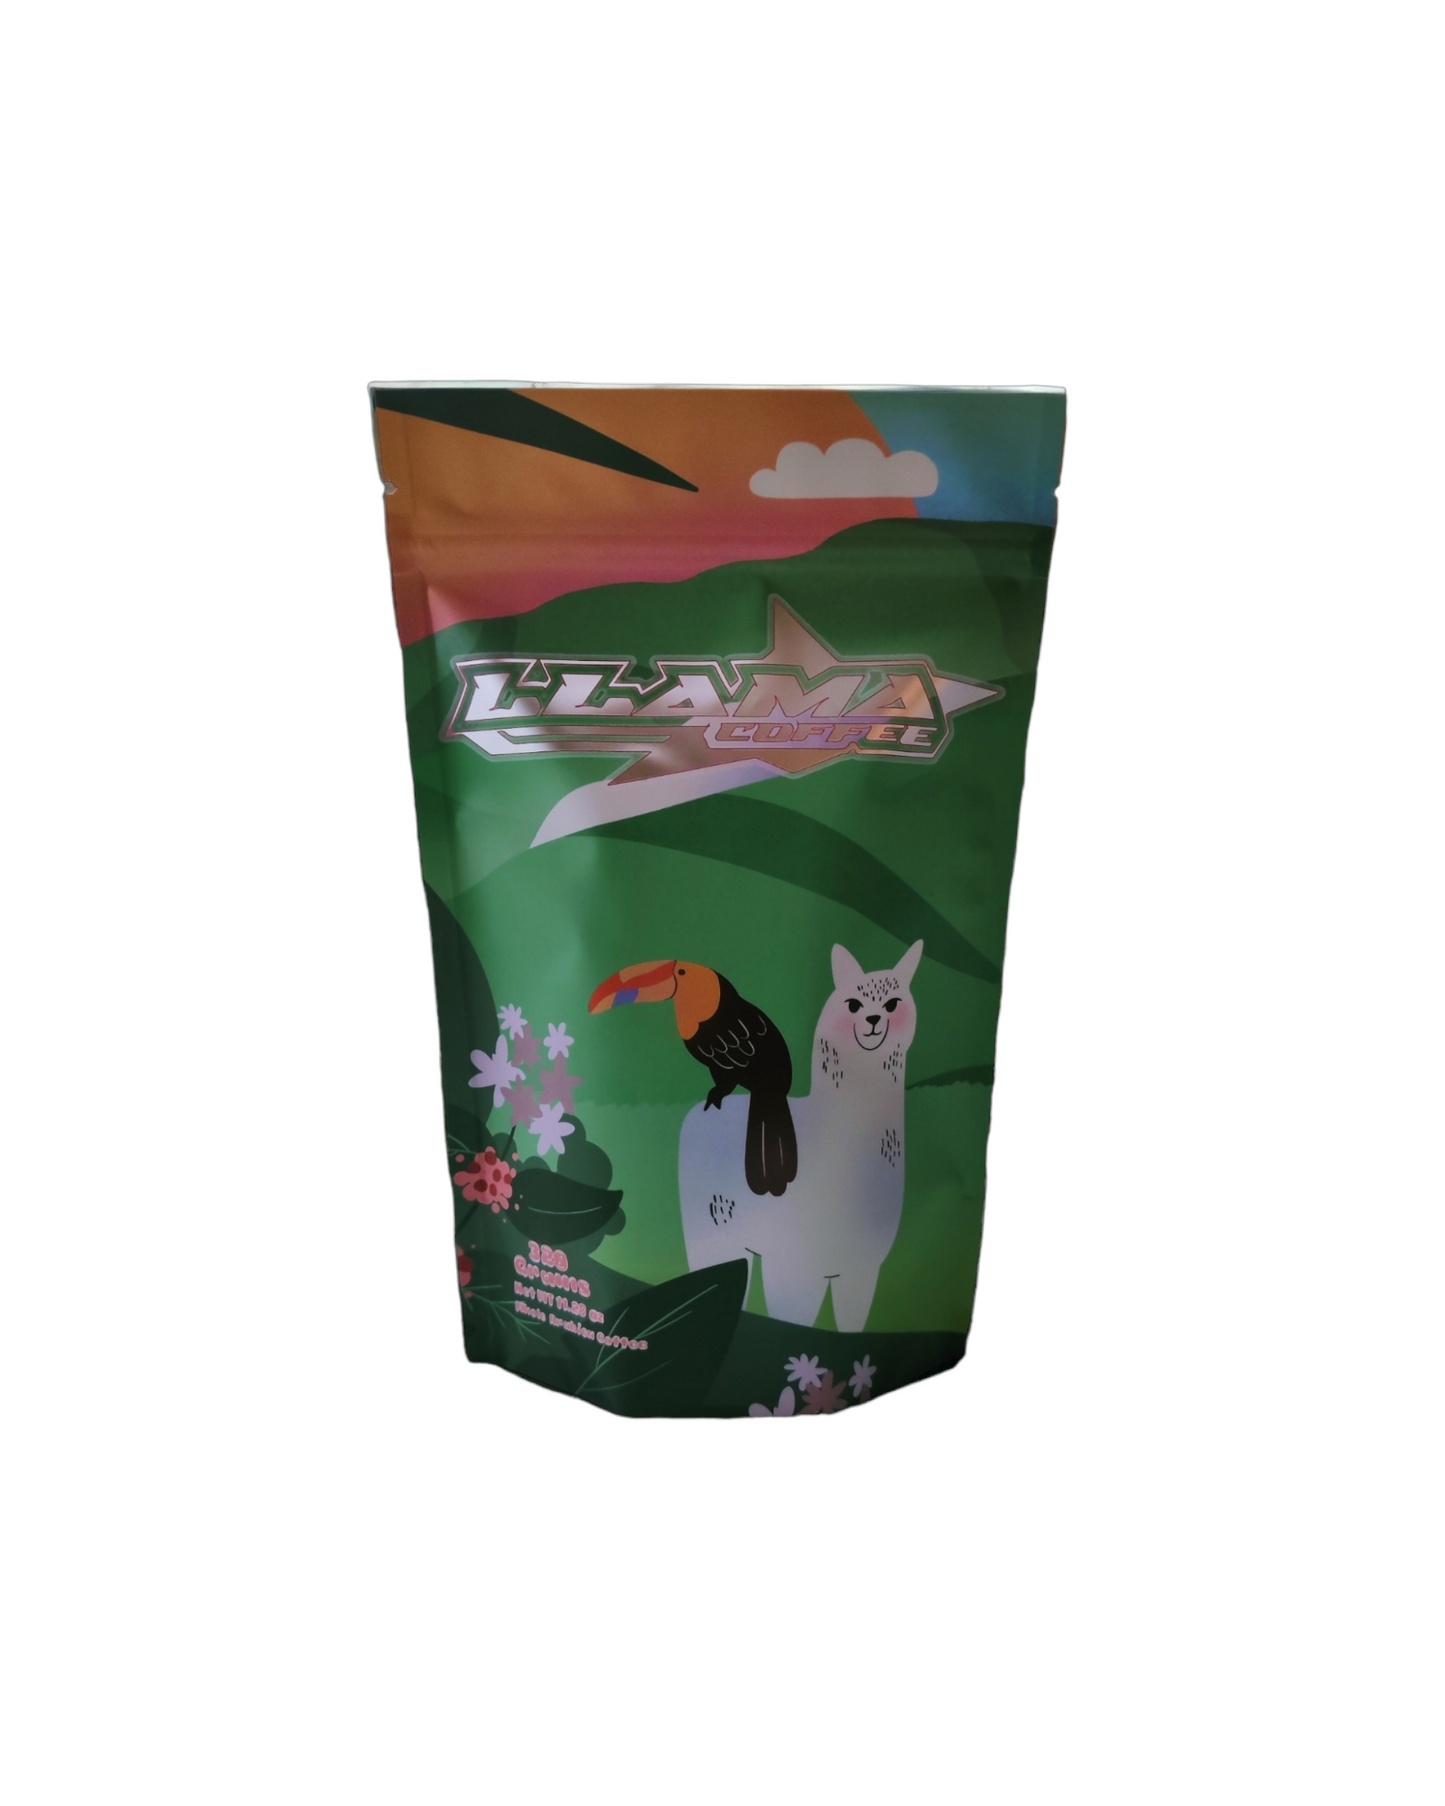 Llama Coffee Ultimate Bundle: T-Shirt + 2 bags of Panamá House Blend +  Llama Pin